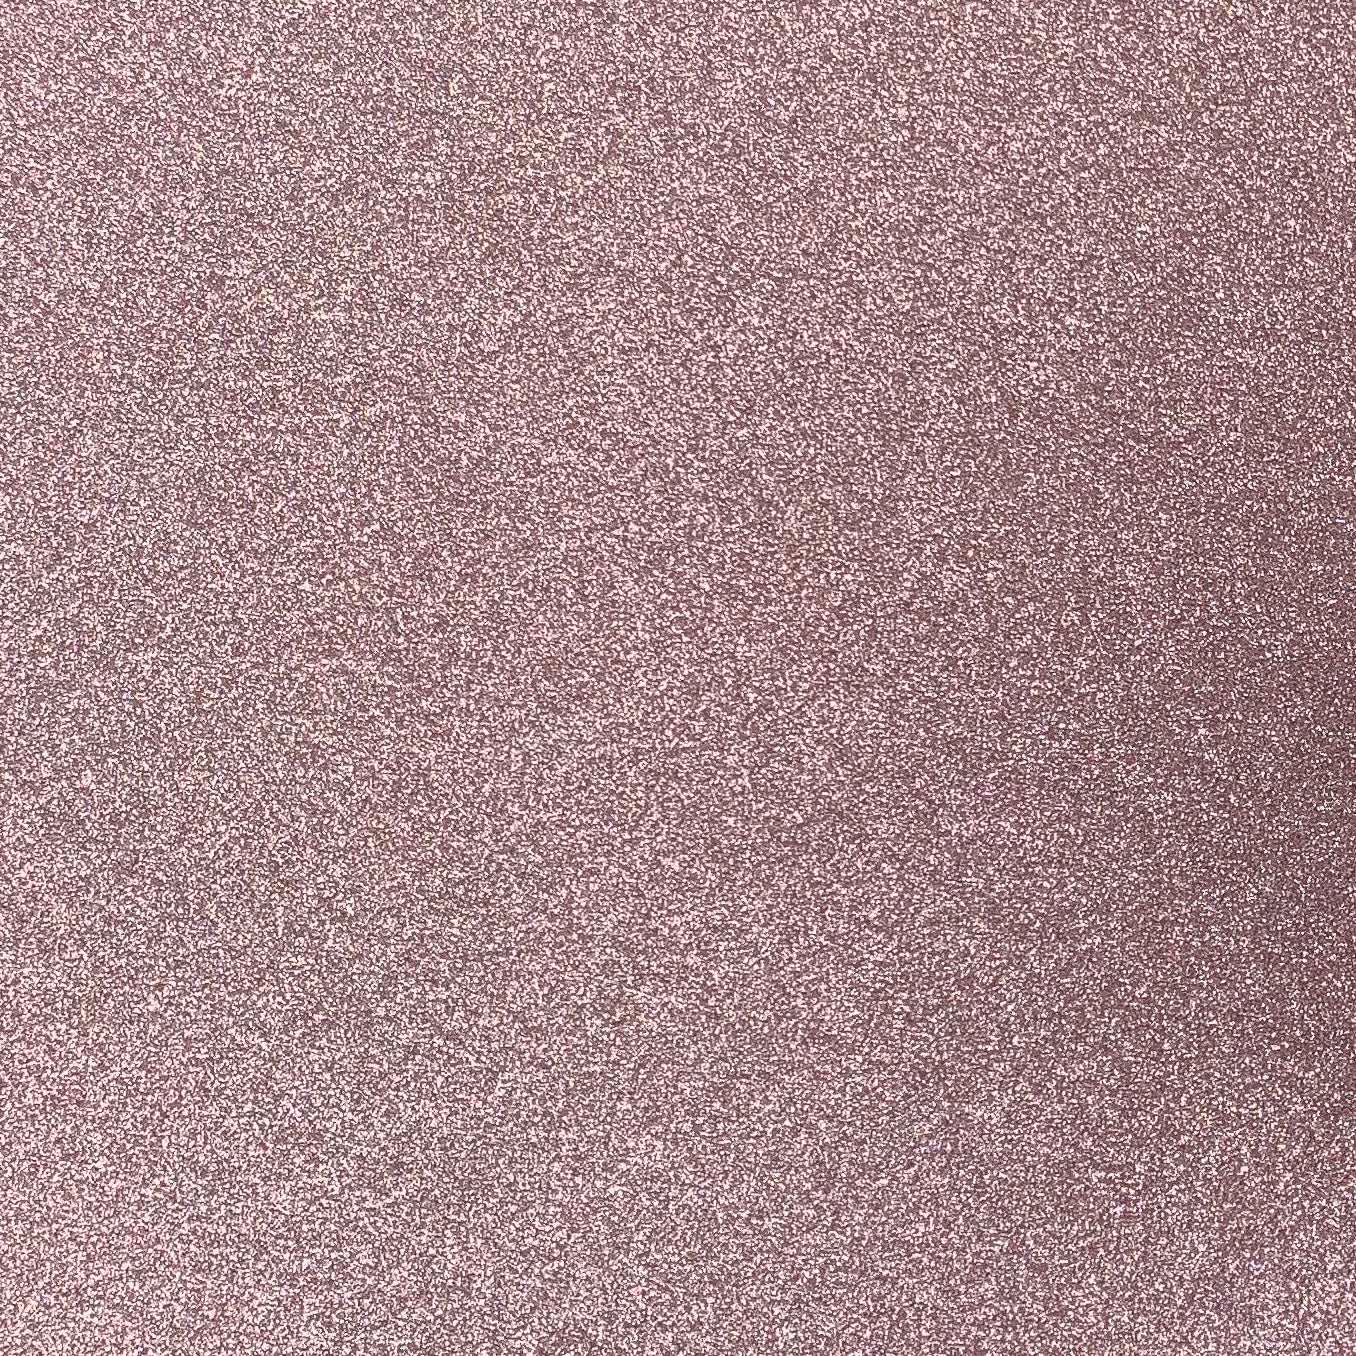 12''x12'' No-shed Glitter Cardstock - 10PK/Light Pink